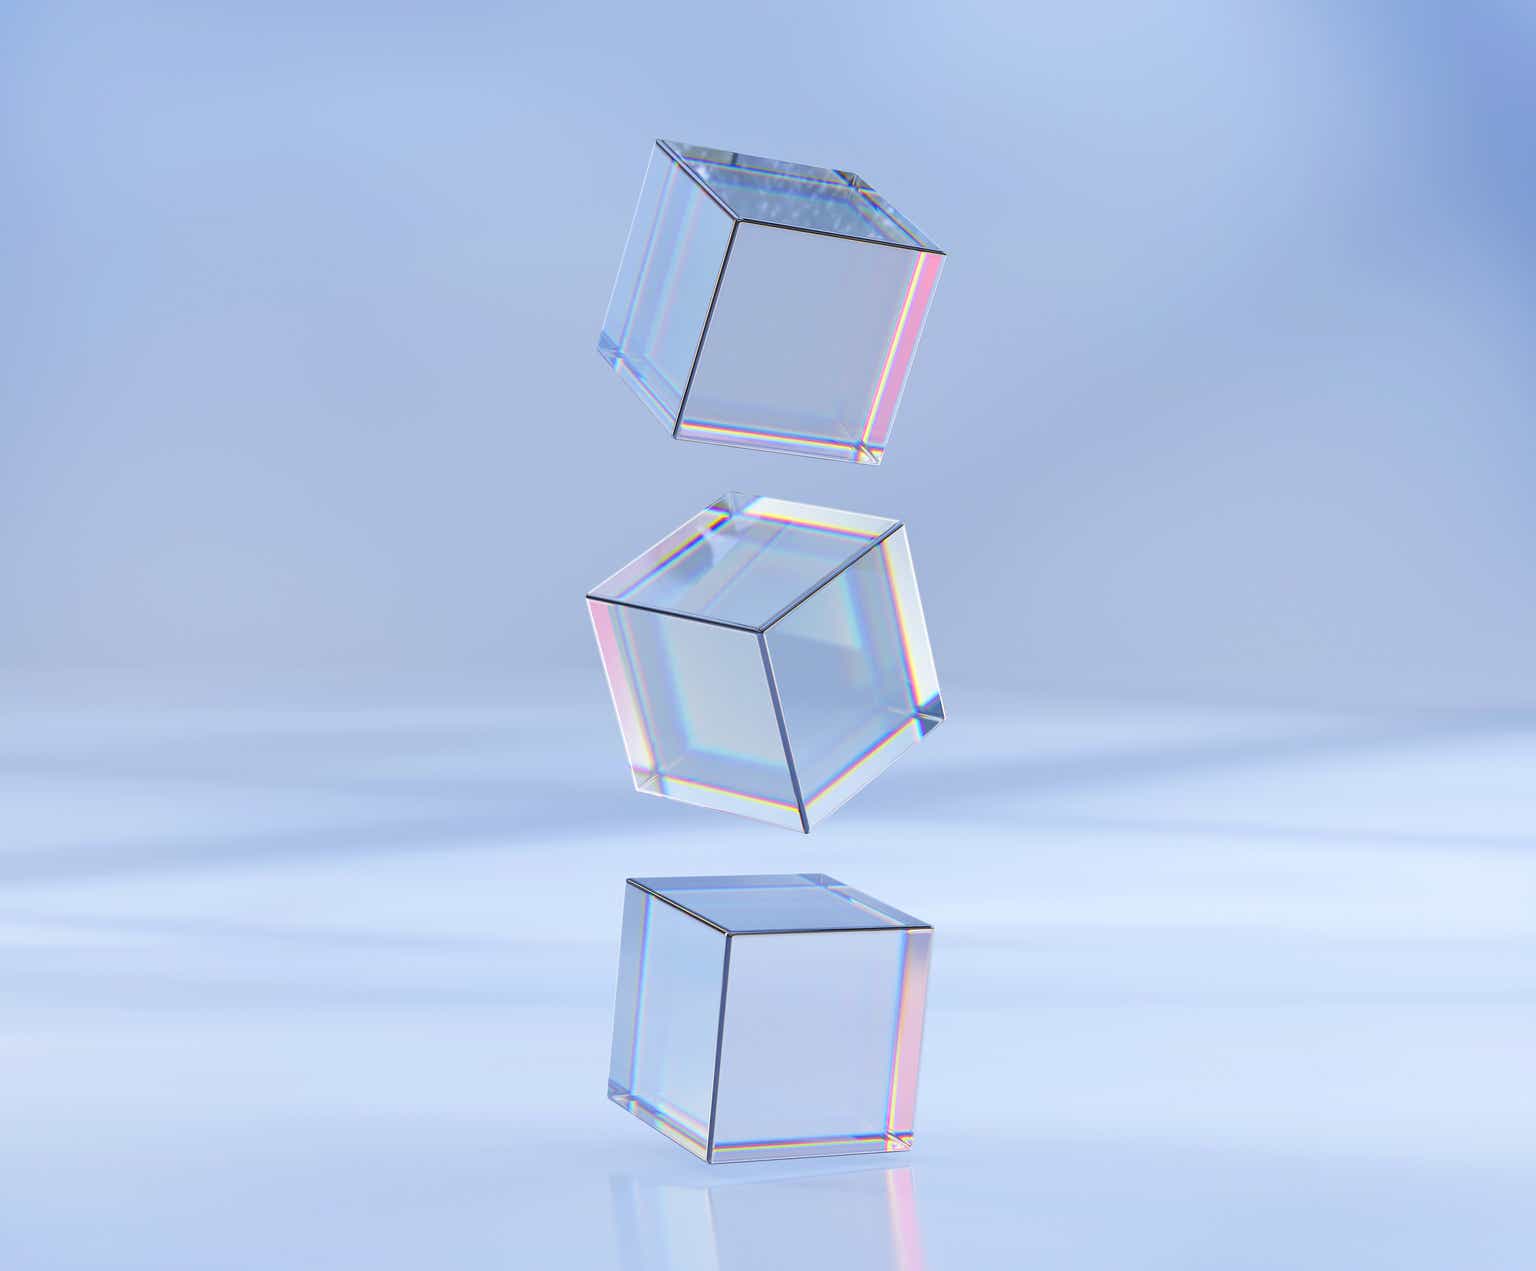 Cube flying